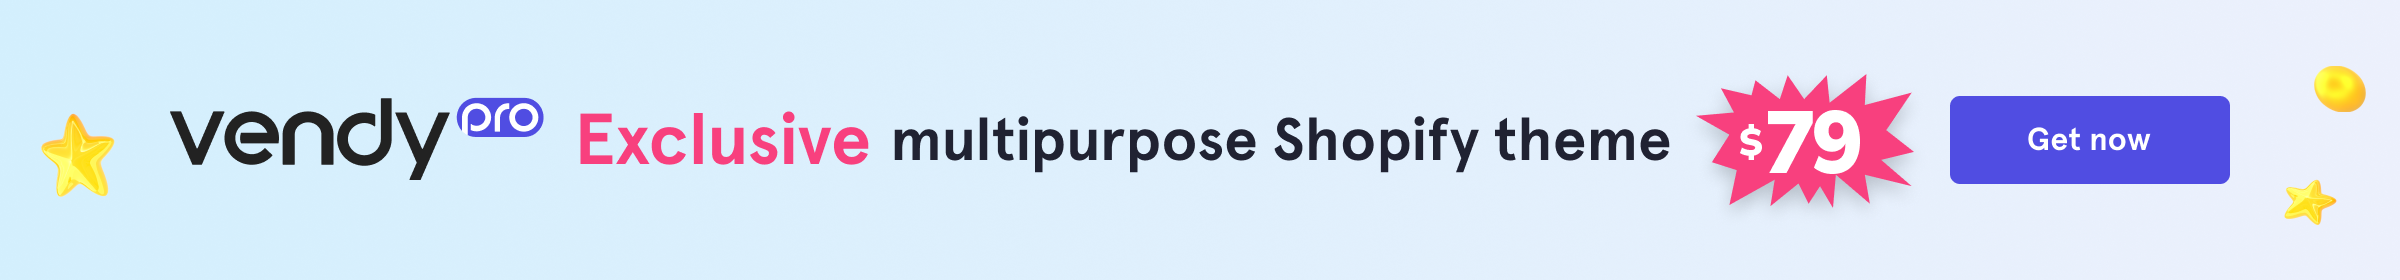 vendy pro multipurpose shopify theme